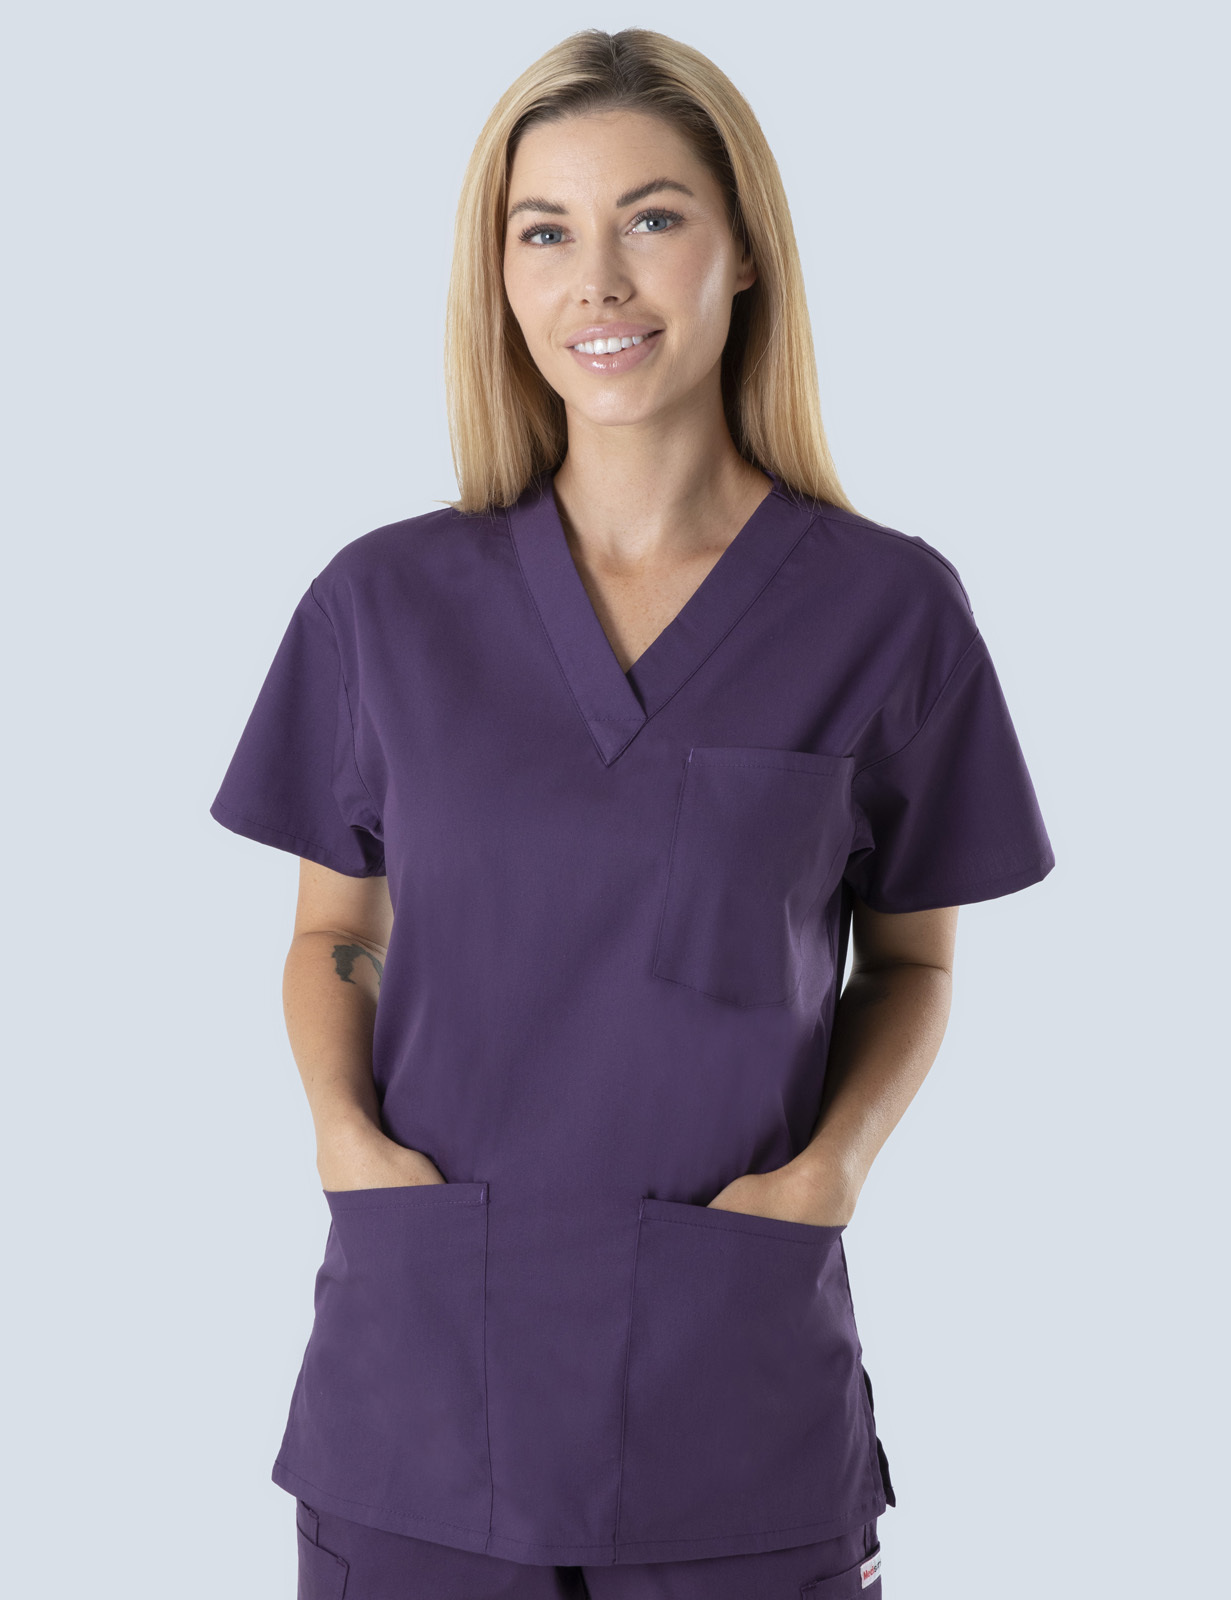 Northern Hospital - ED Nurse (4 Pocket Scrub Top and Cargo Pants in Aubergine incl Logos)